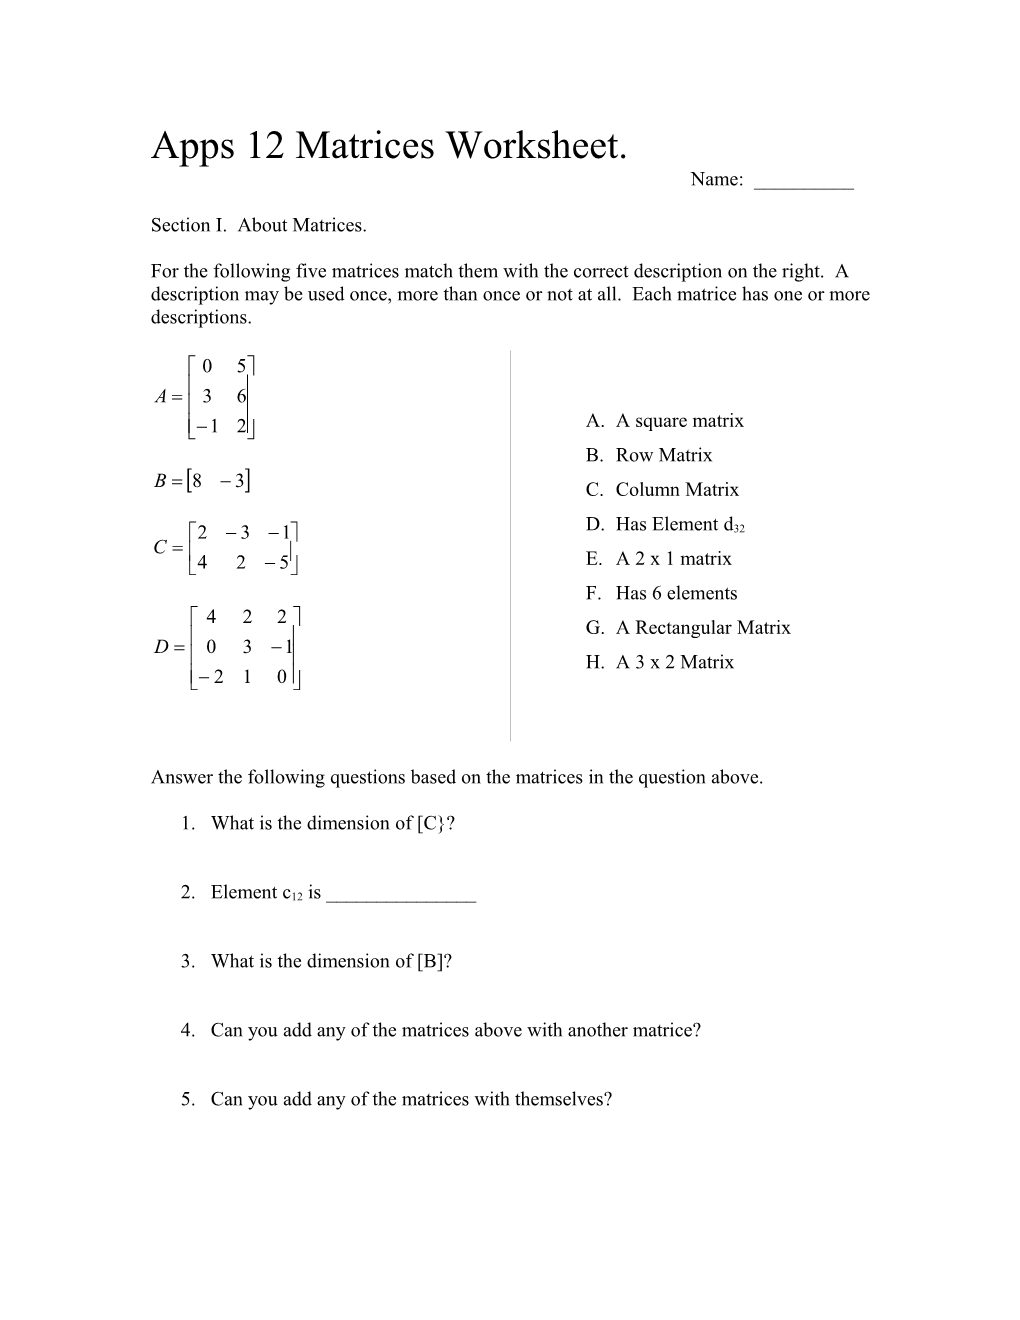 Apps 12 Matrices Worksheet s1